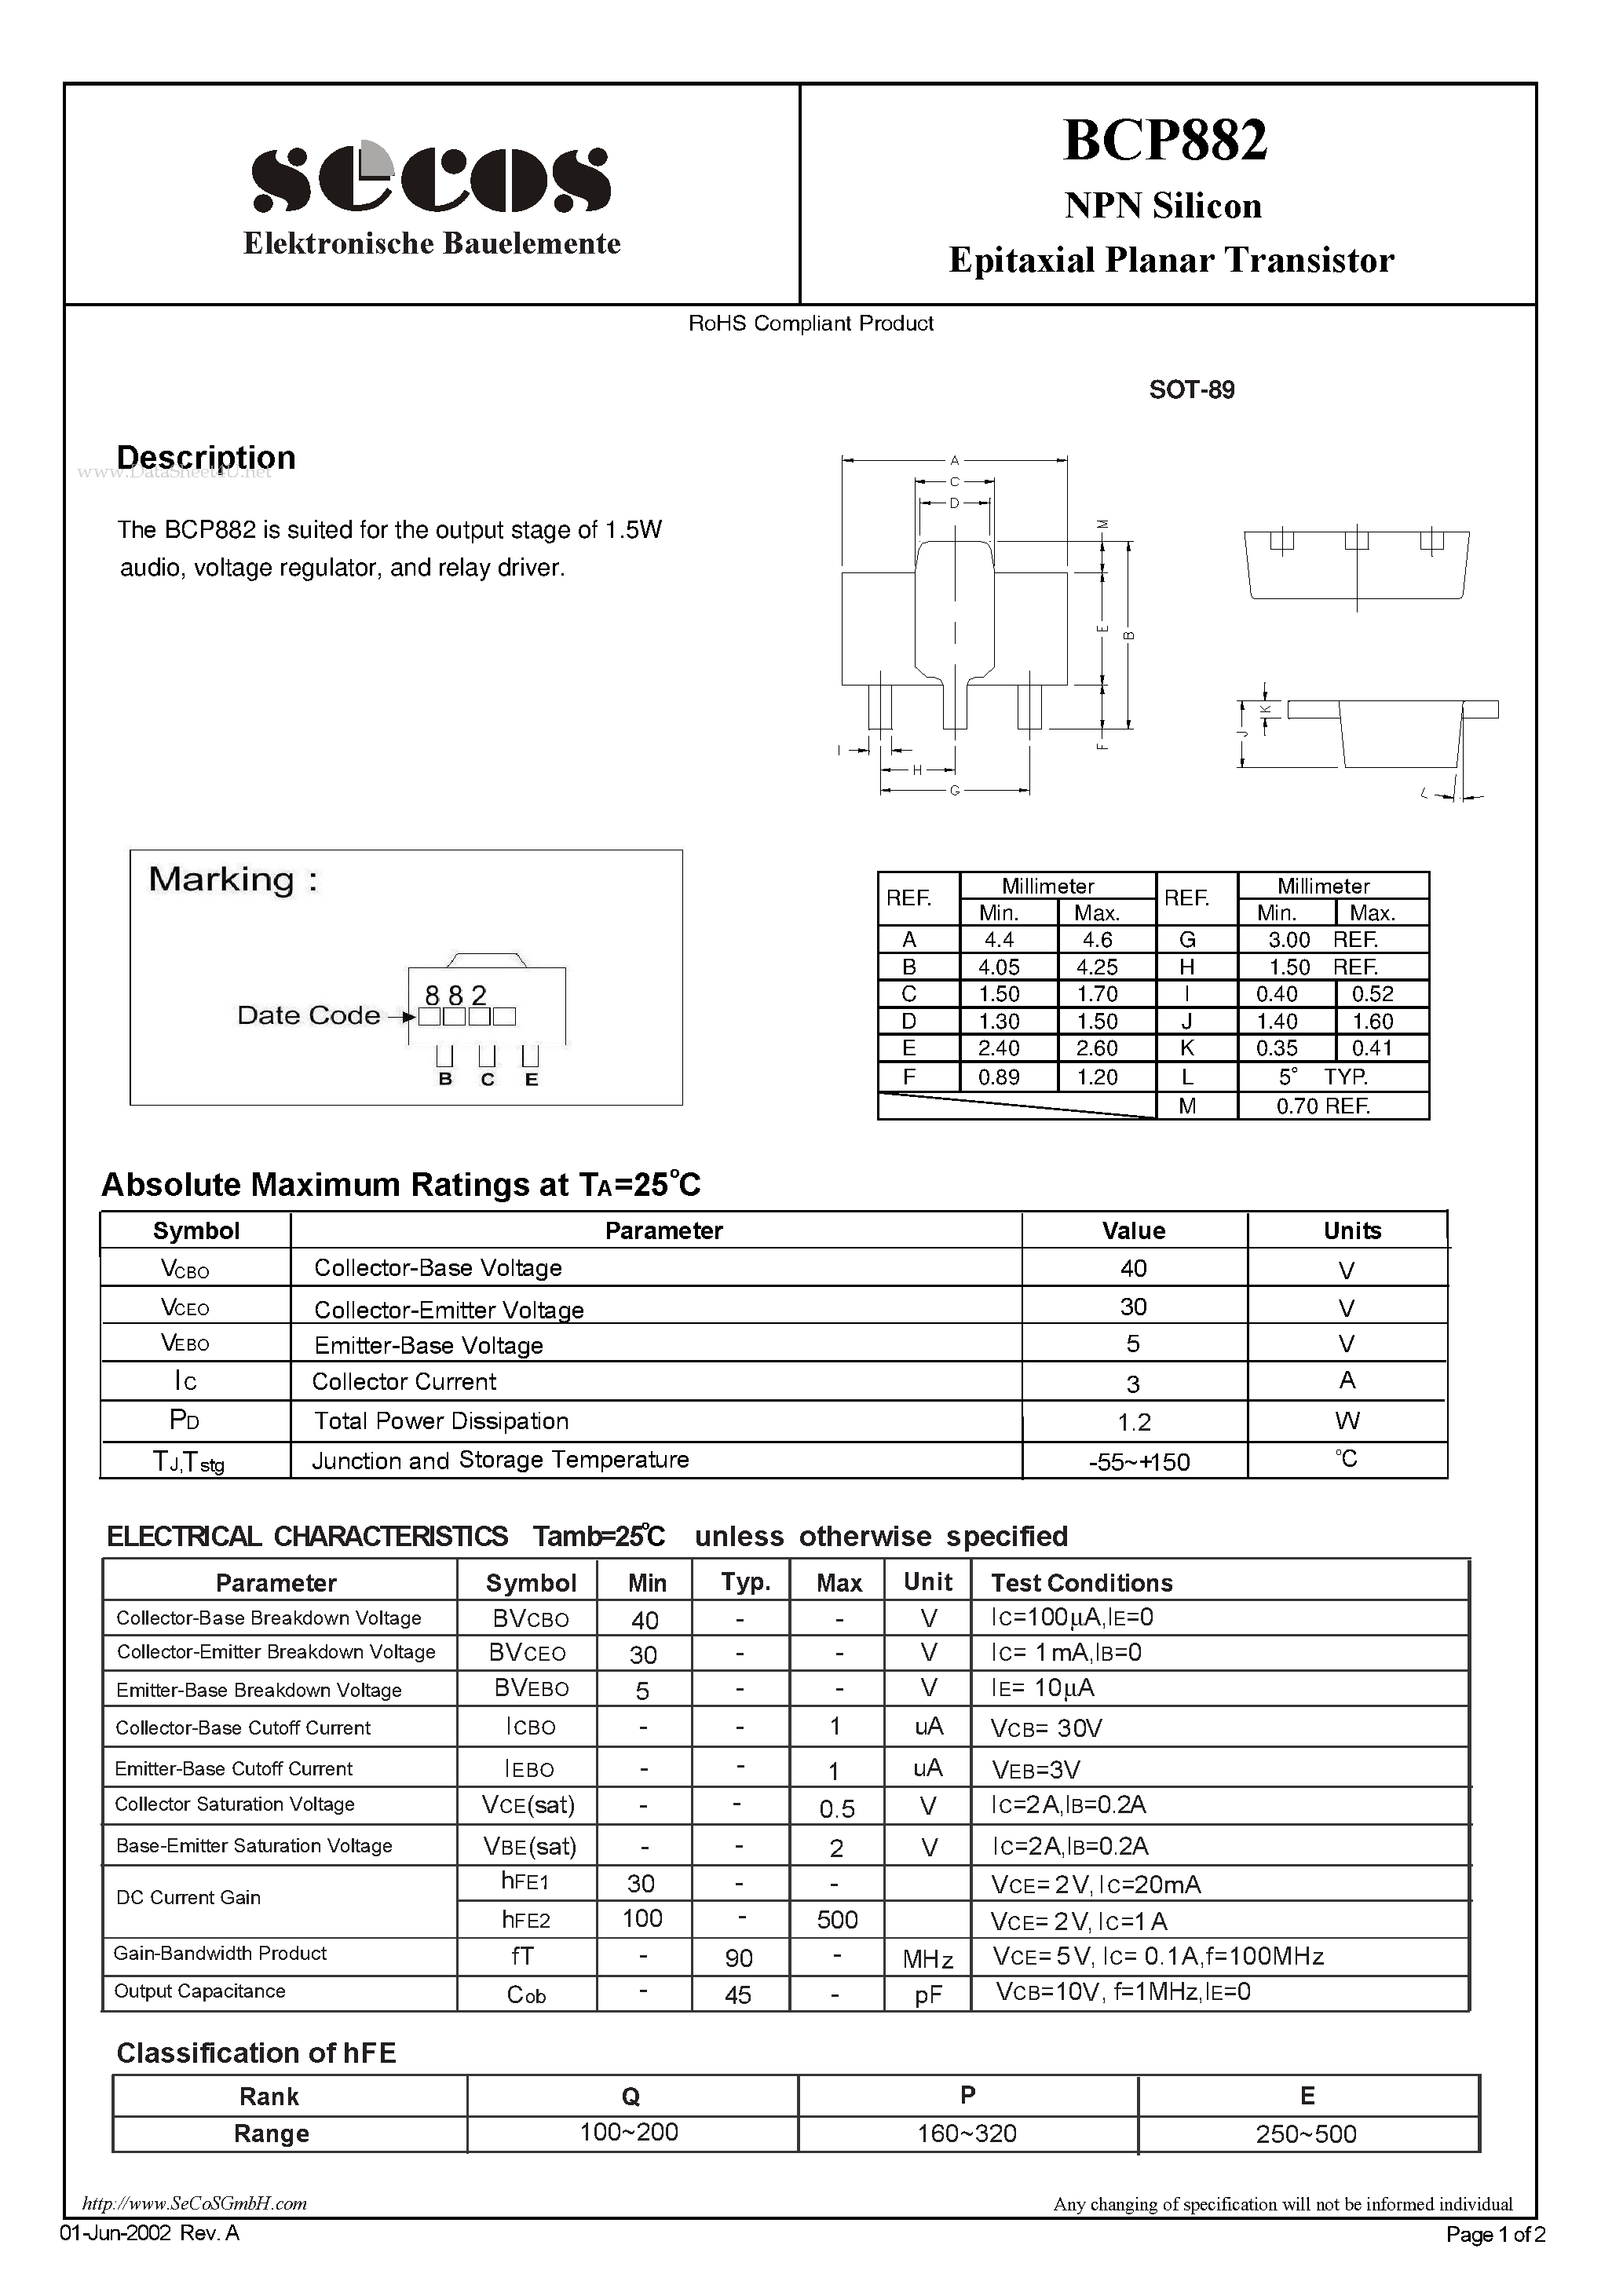 Даташит BCP882 - Epitaxial Planar Transistor страница 1